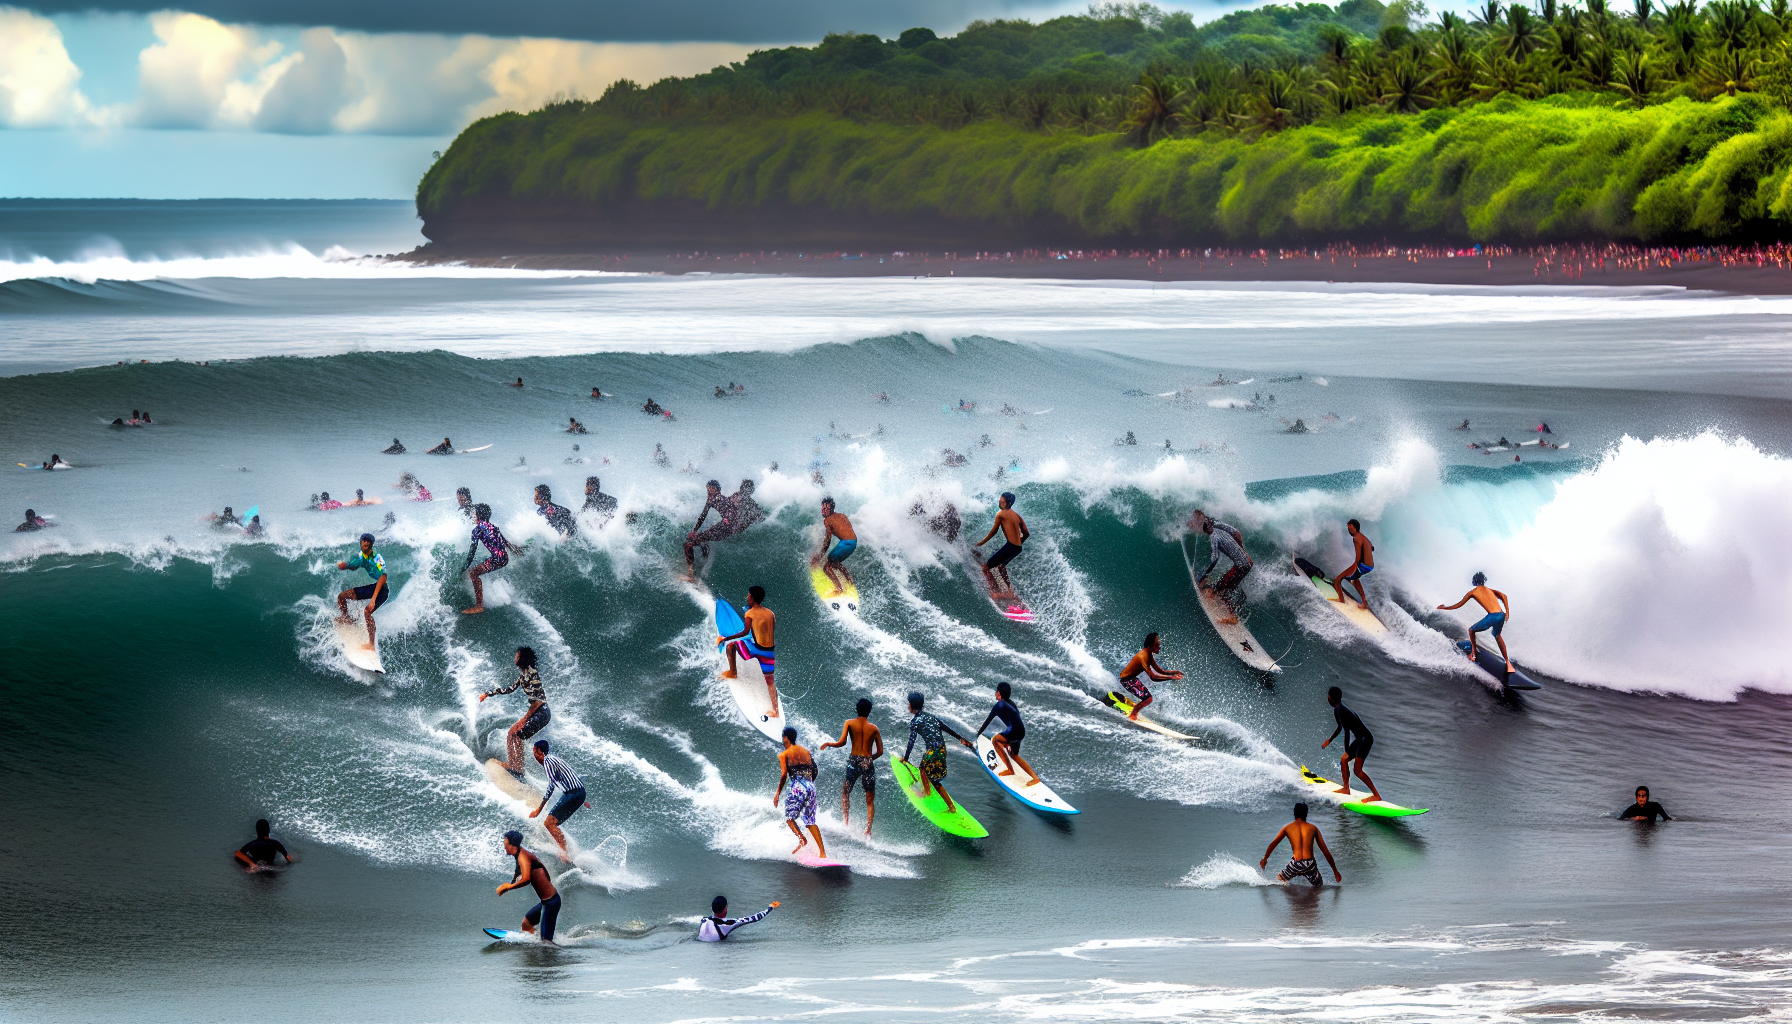 Surfers enjoying the waves in Canggu